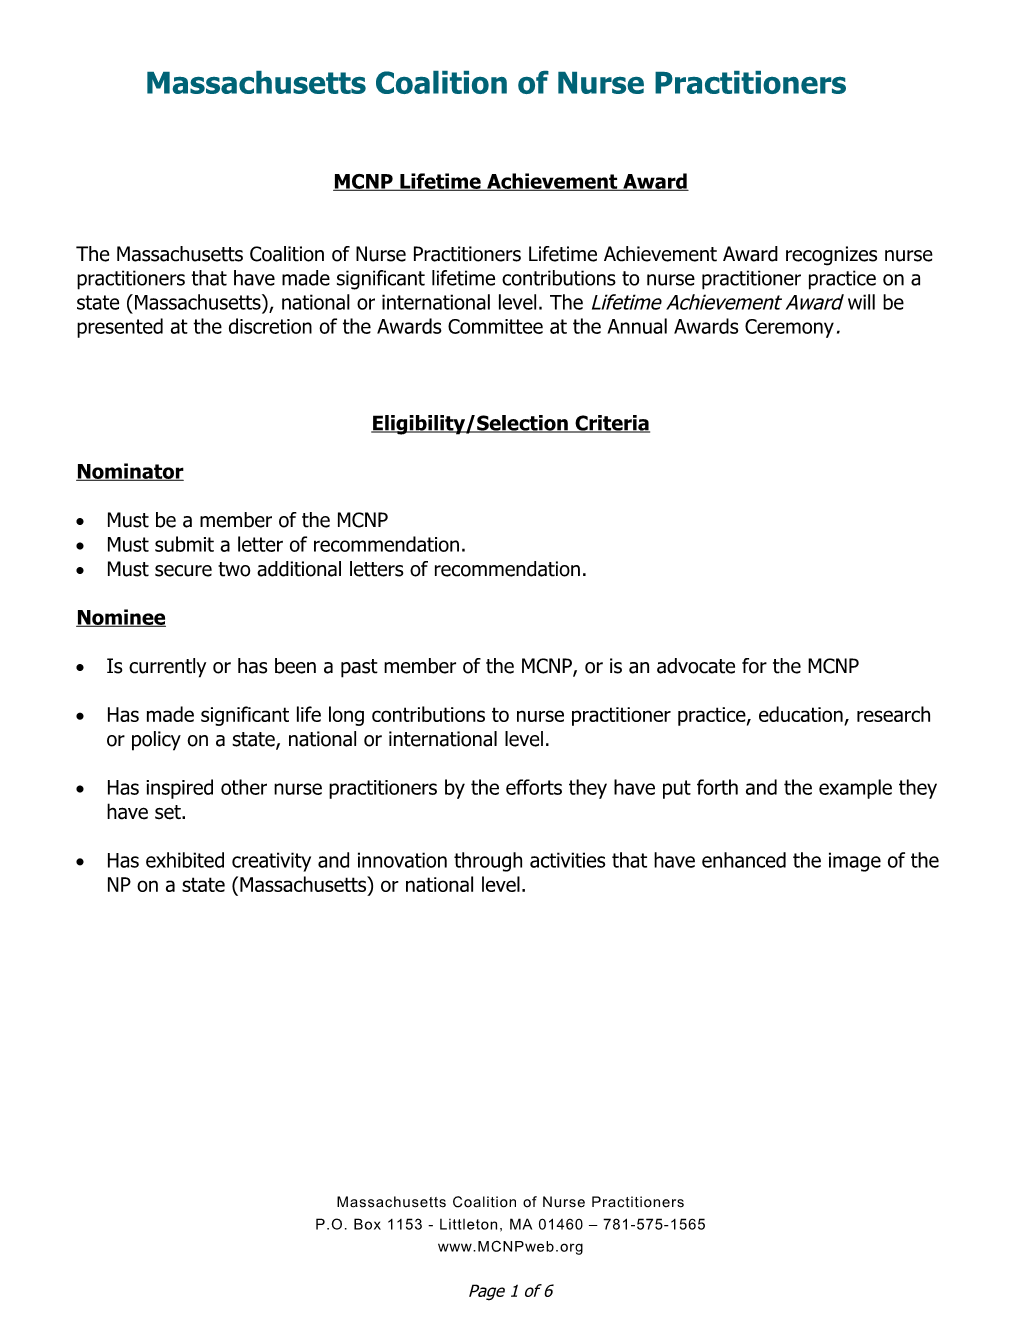 MCNP Lifetime Acheivement Award